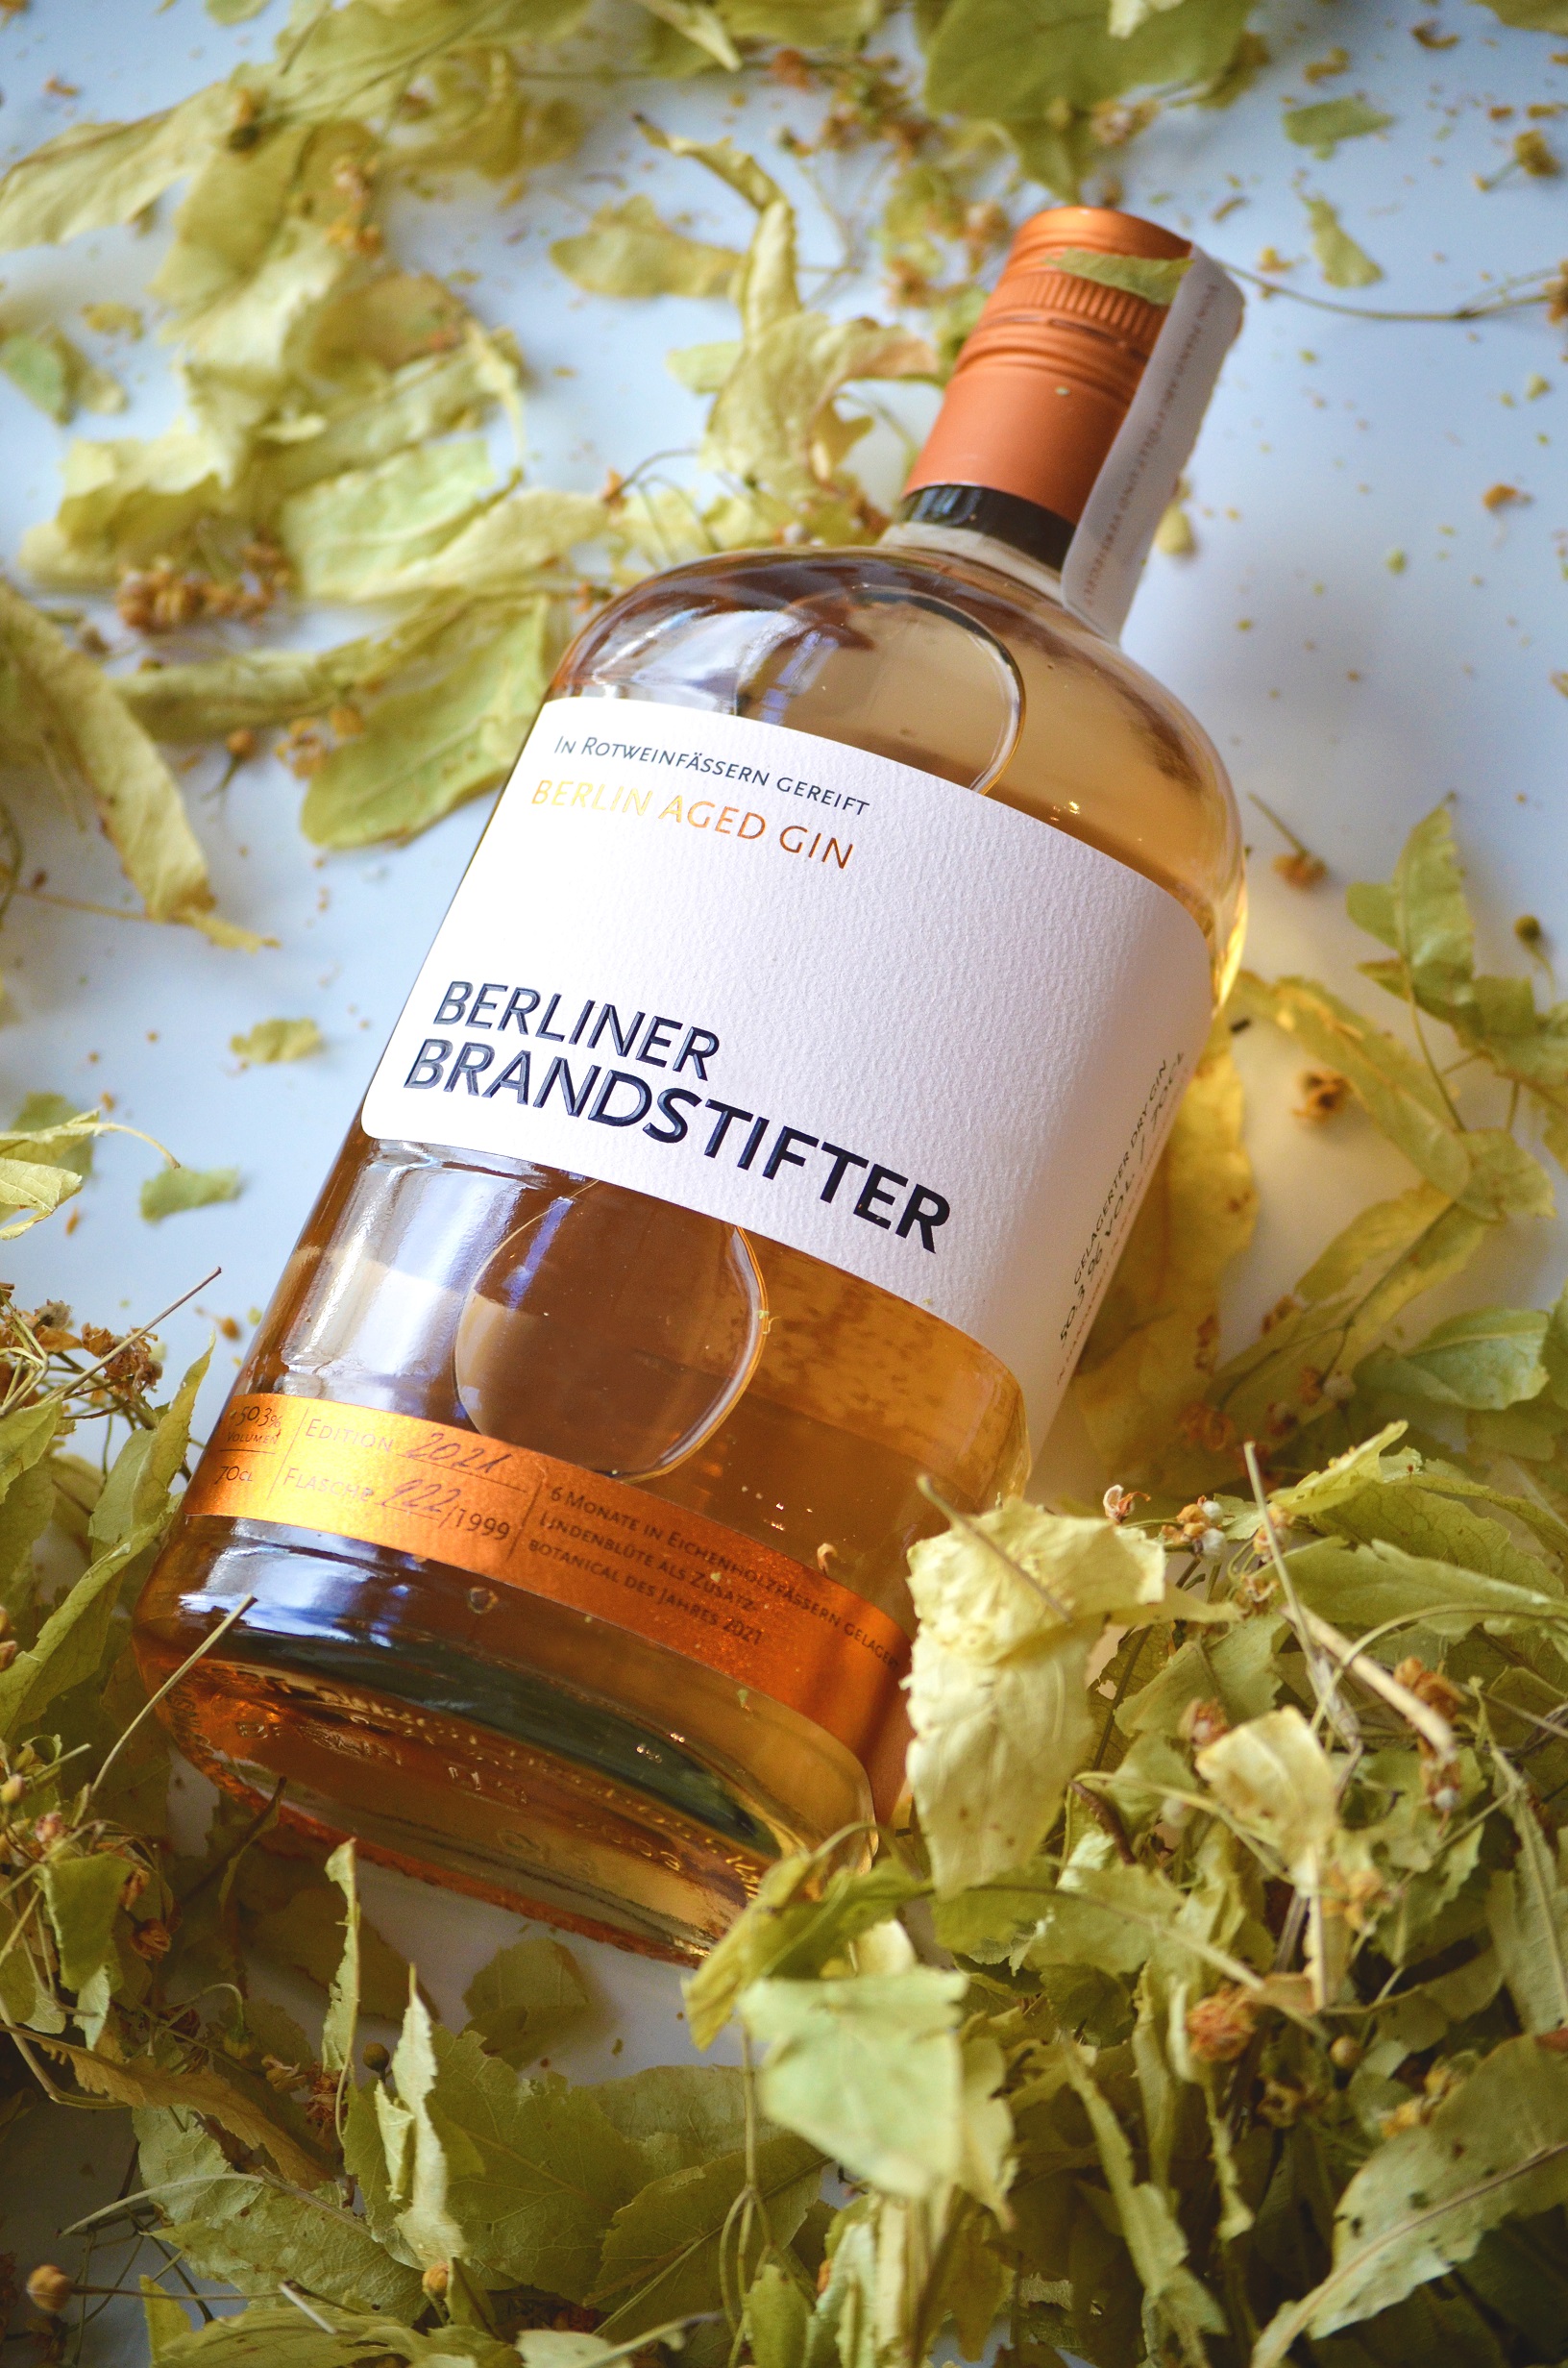 Berliner Brandstifter - Berlin Aged Gin - 2021 Edition - 0,7l 50,3%vol.